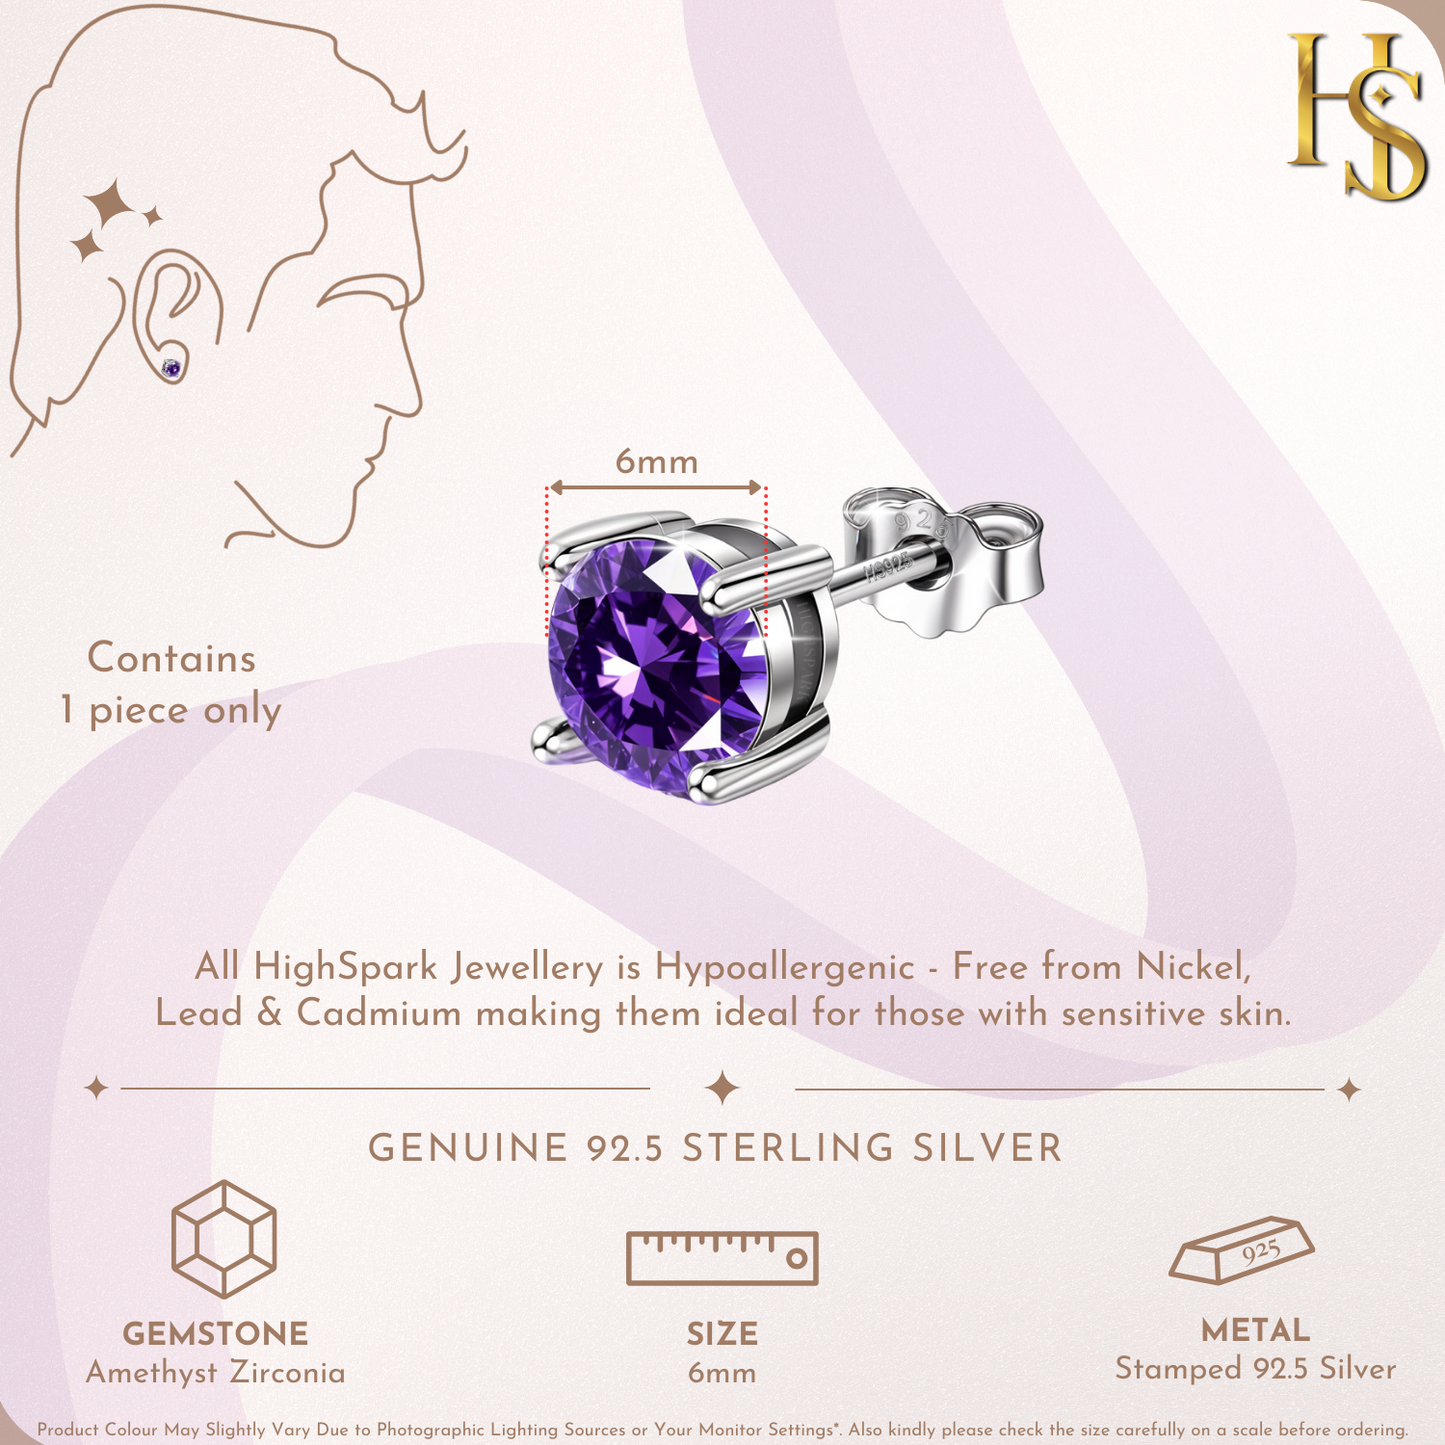 Men's Solitaire Stud Earring - 925 Silver - Birthstone February Amethyst Zirconia - 1 Piece